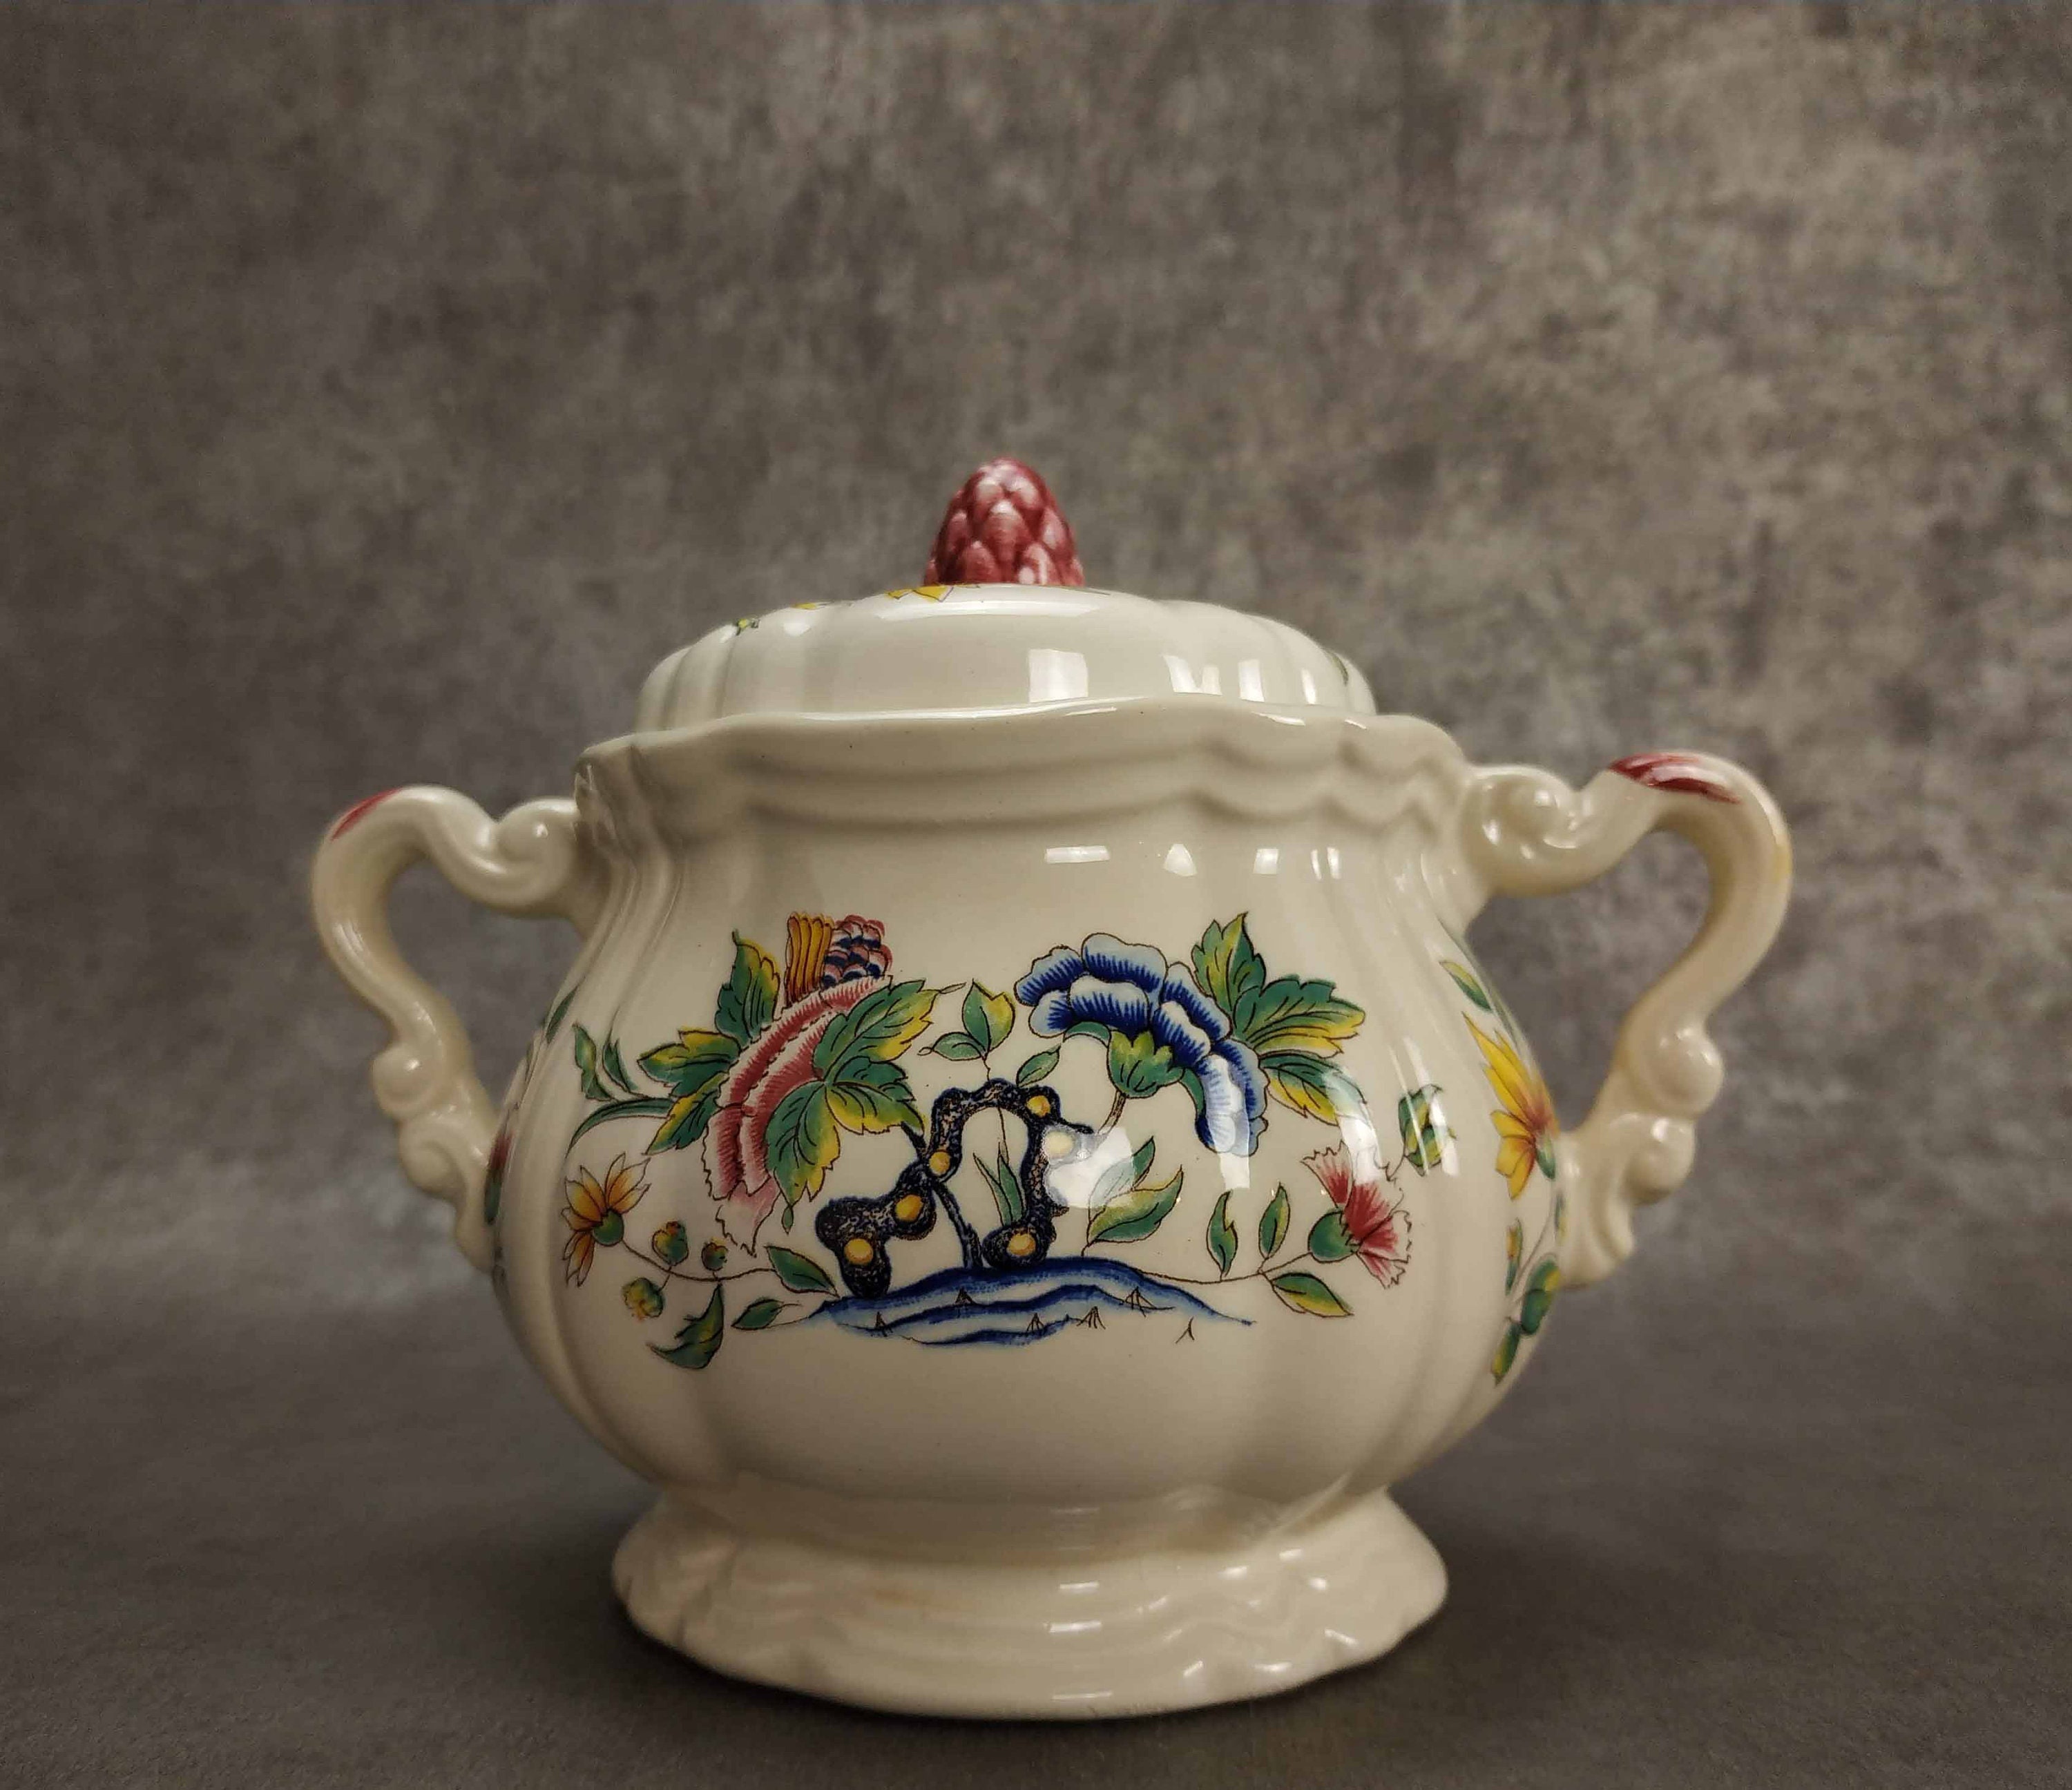 Cru Sarreguemines Rouen Sugar Bowl, Ceramic Flower Decorated Français Table Decor, Glazed Earthenwar